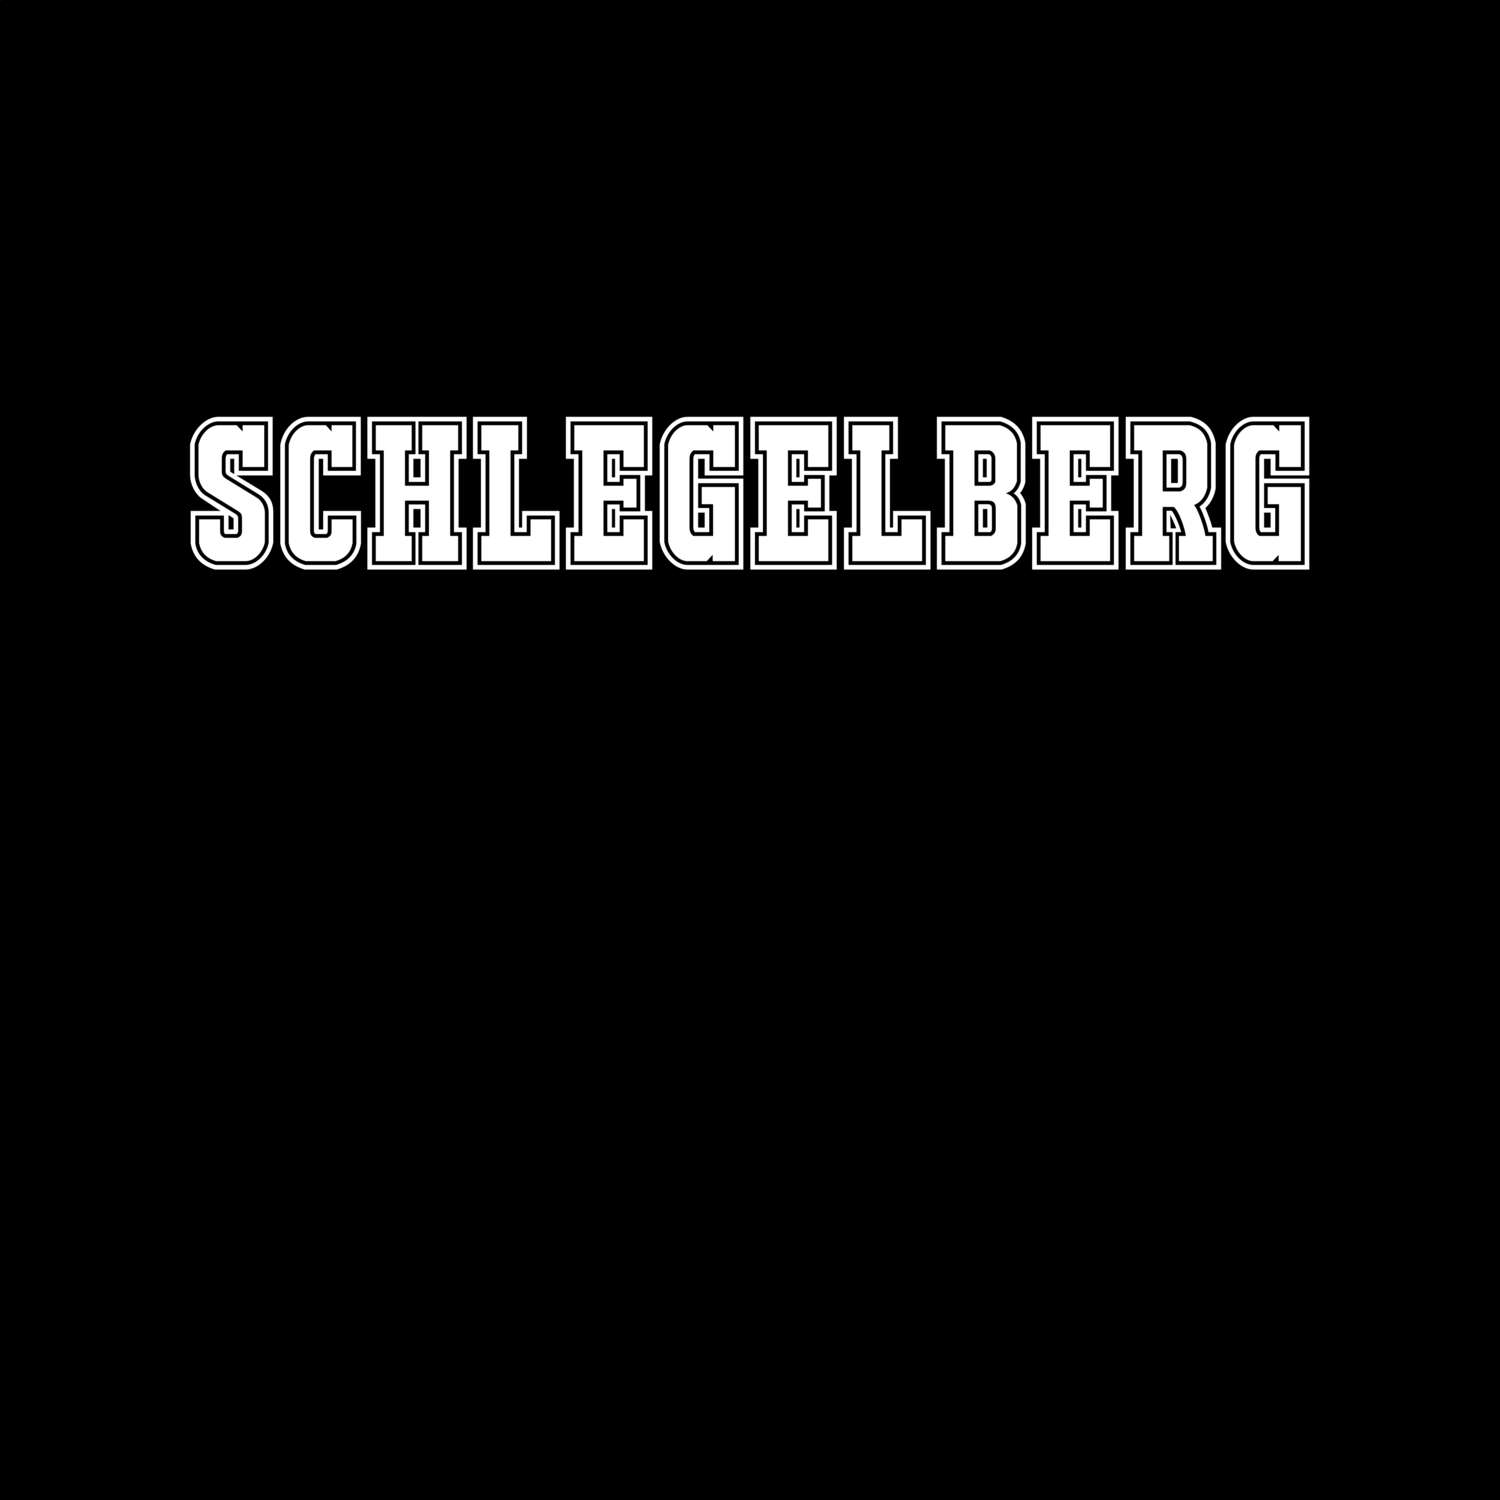 Schlegelberg T-Shirt »Classic«